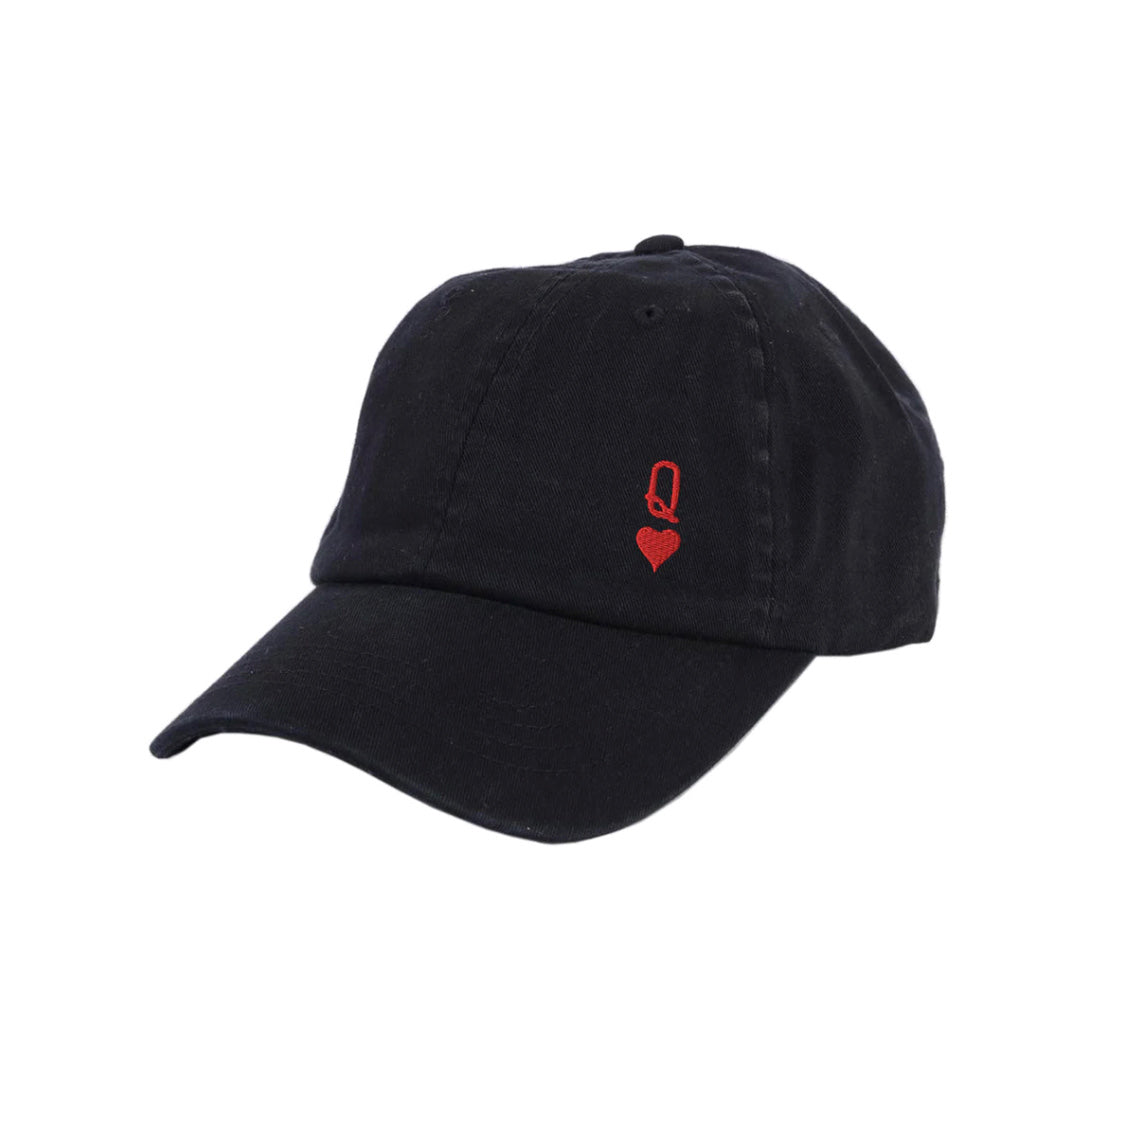 Queen Embroidered cap